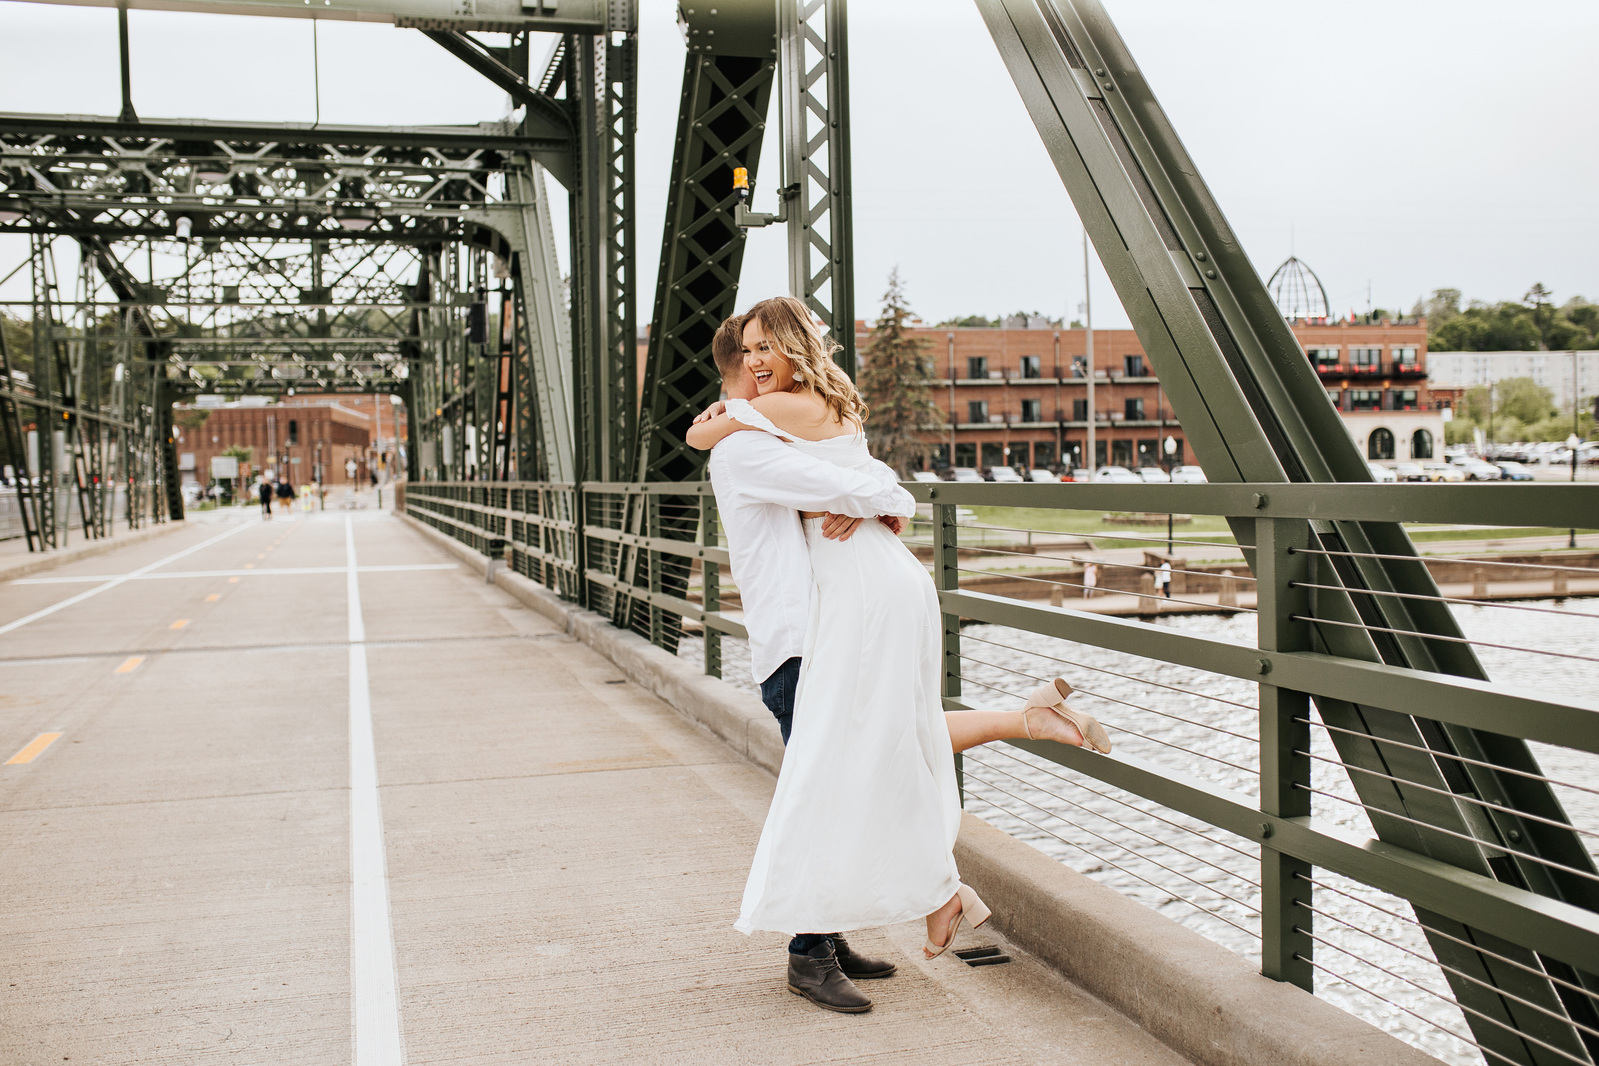 Engagement photos in Stillwater, Minnesota. Couples photos taken at the Lift Bridge.